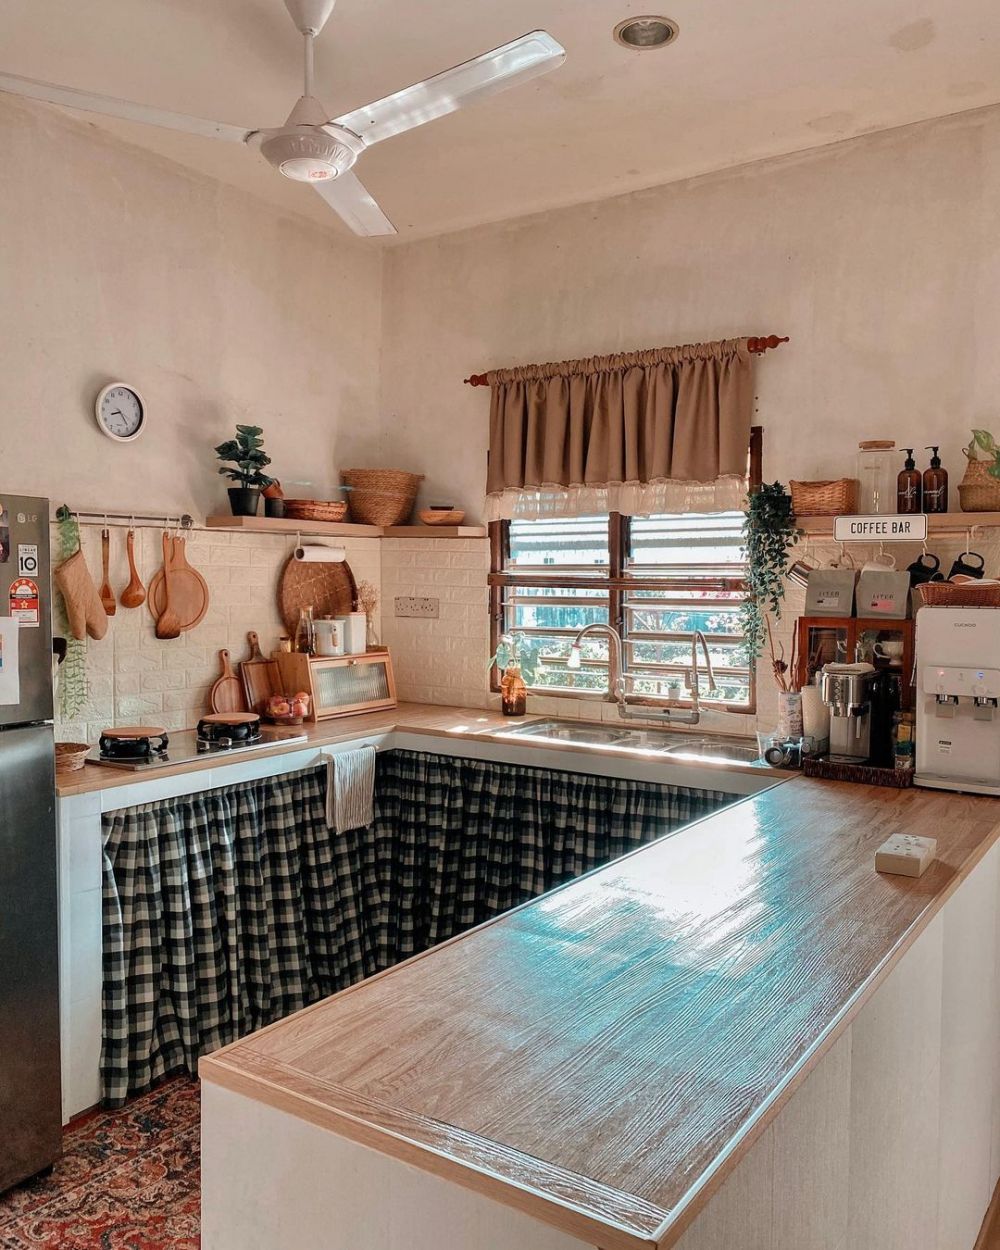 9 Potret dapur tanpa kitchen set ini mirip farmhouse film Hollywood, suasana vintagenya tak ngebosenin